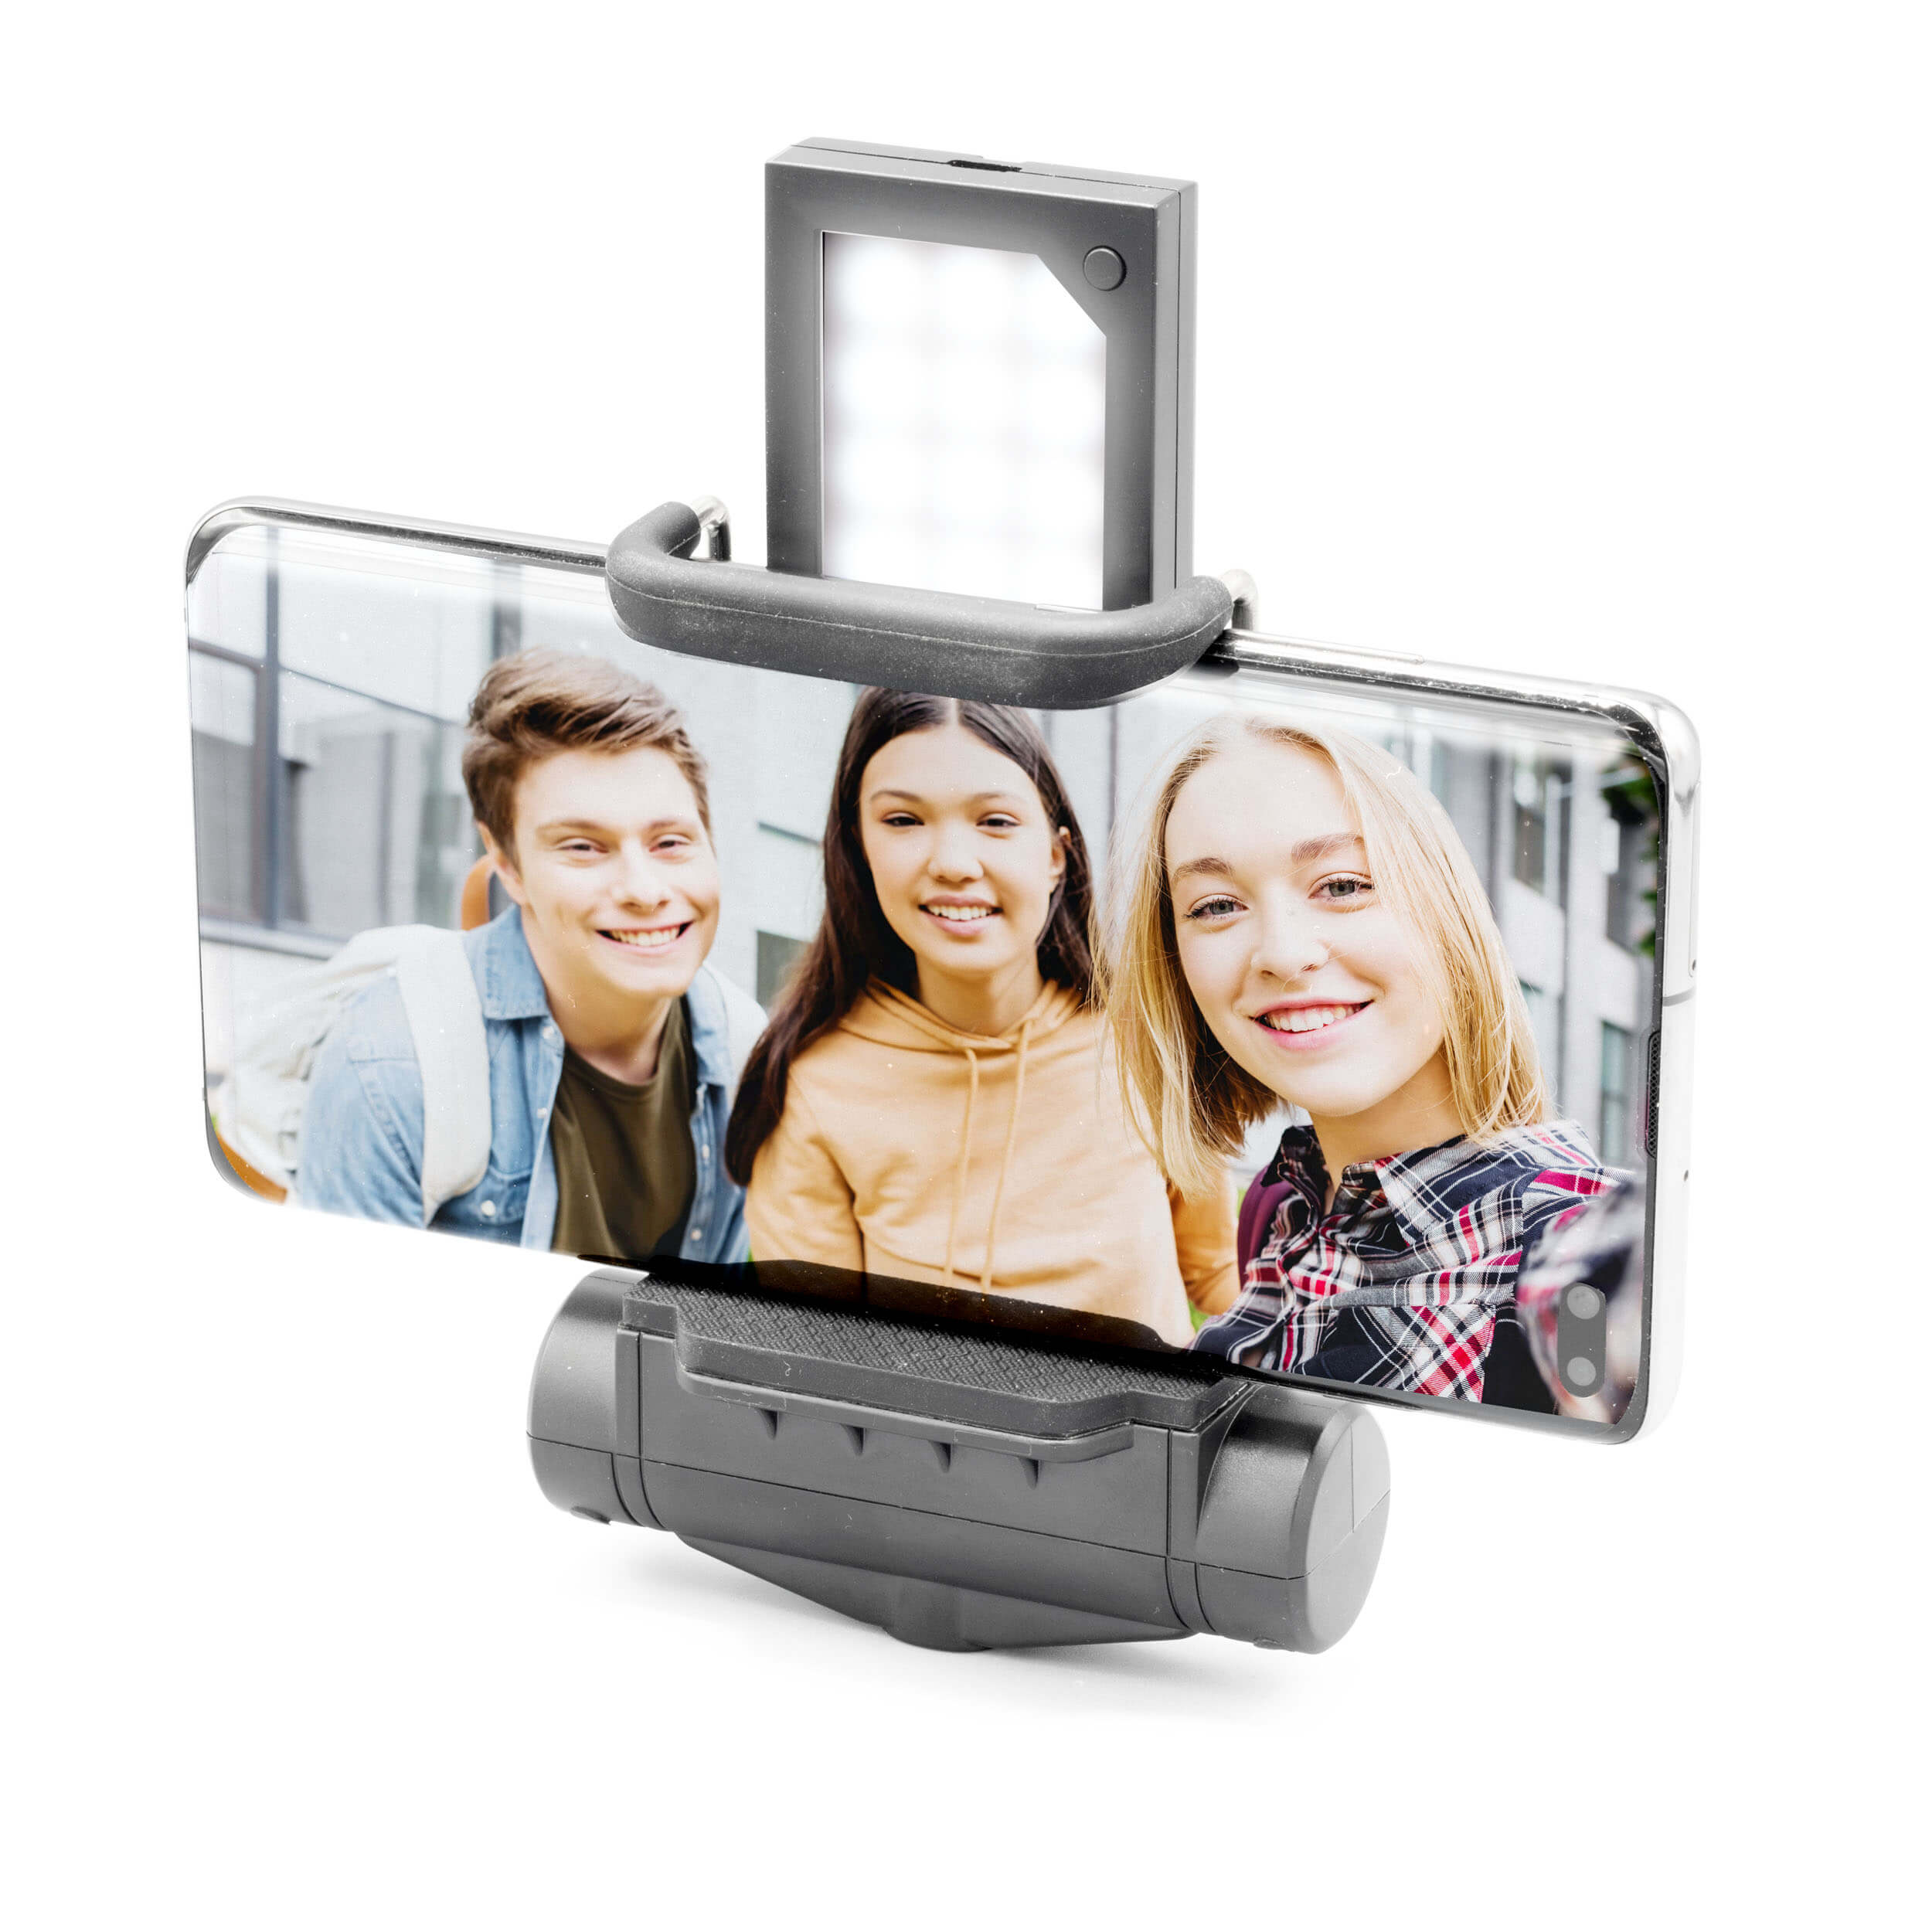 Smart Phone Daylight-Balanced LED Constant Light By PixaPro 